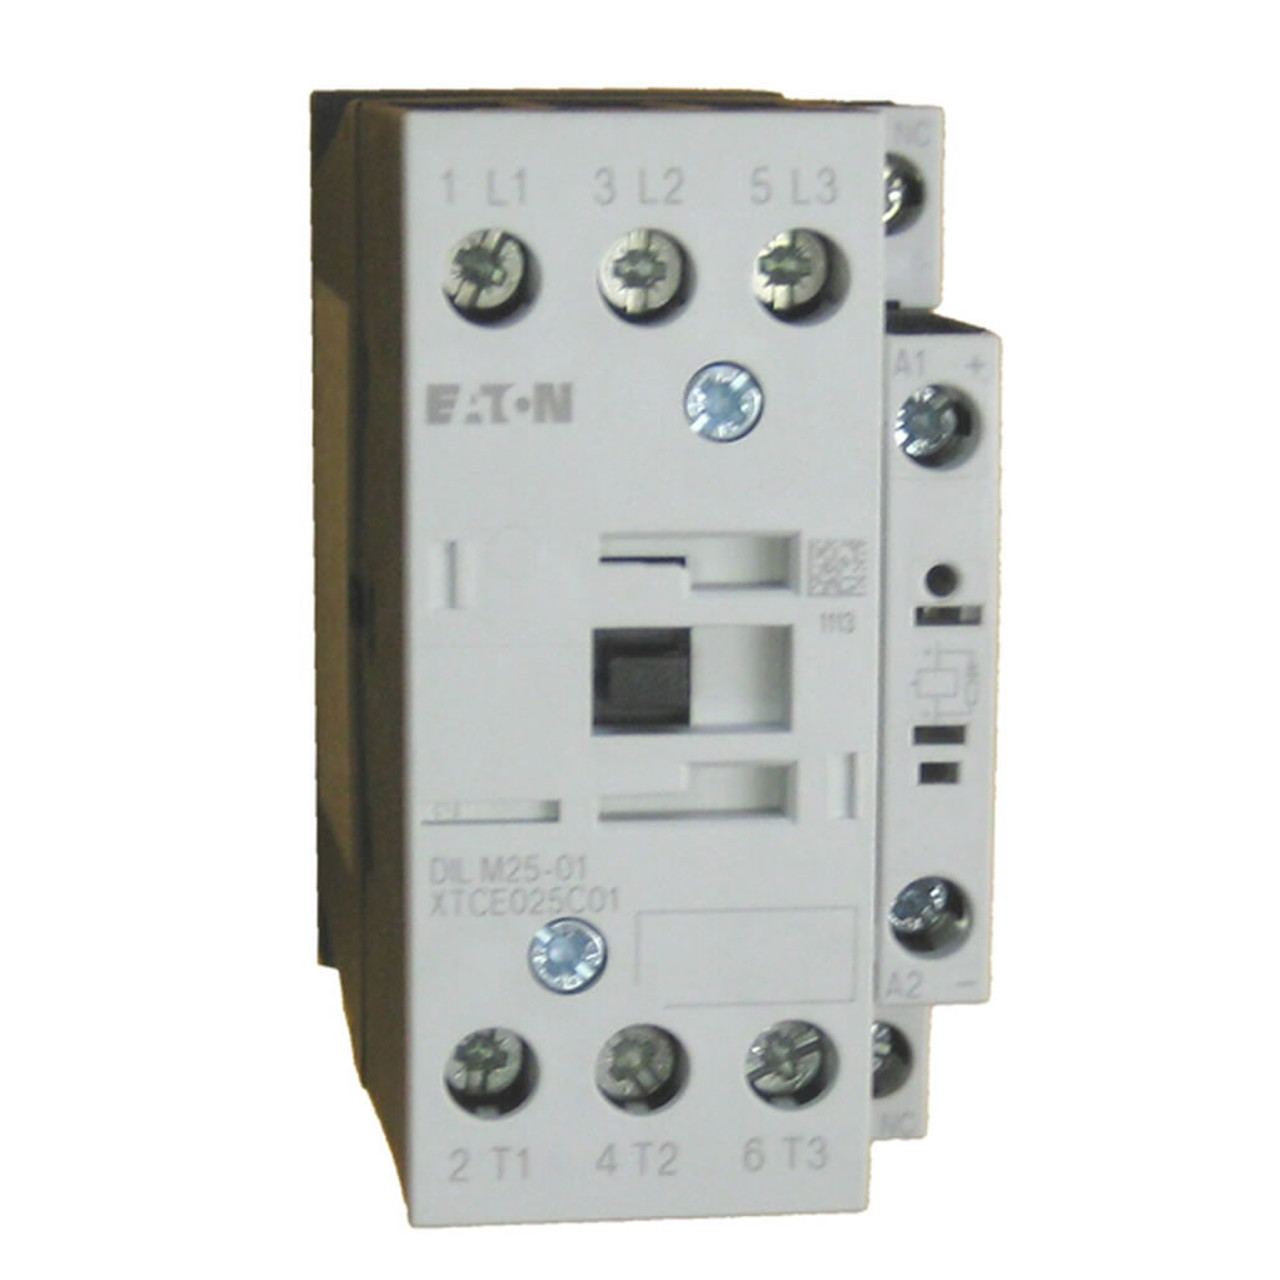 Eaton XTCE025C01W contactor